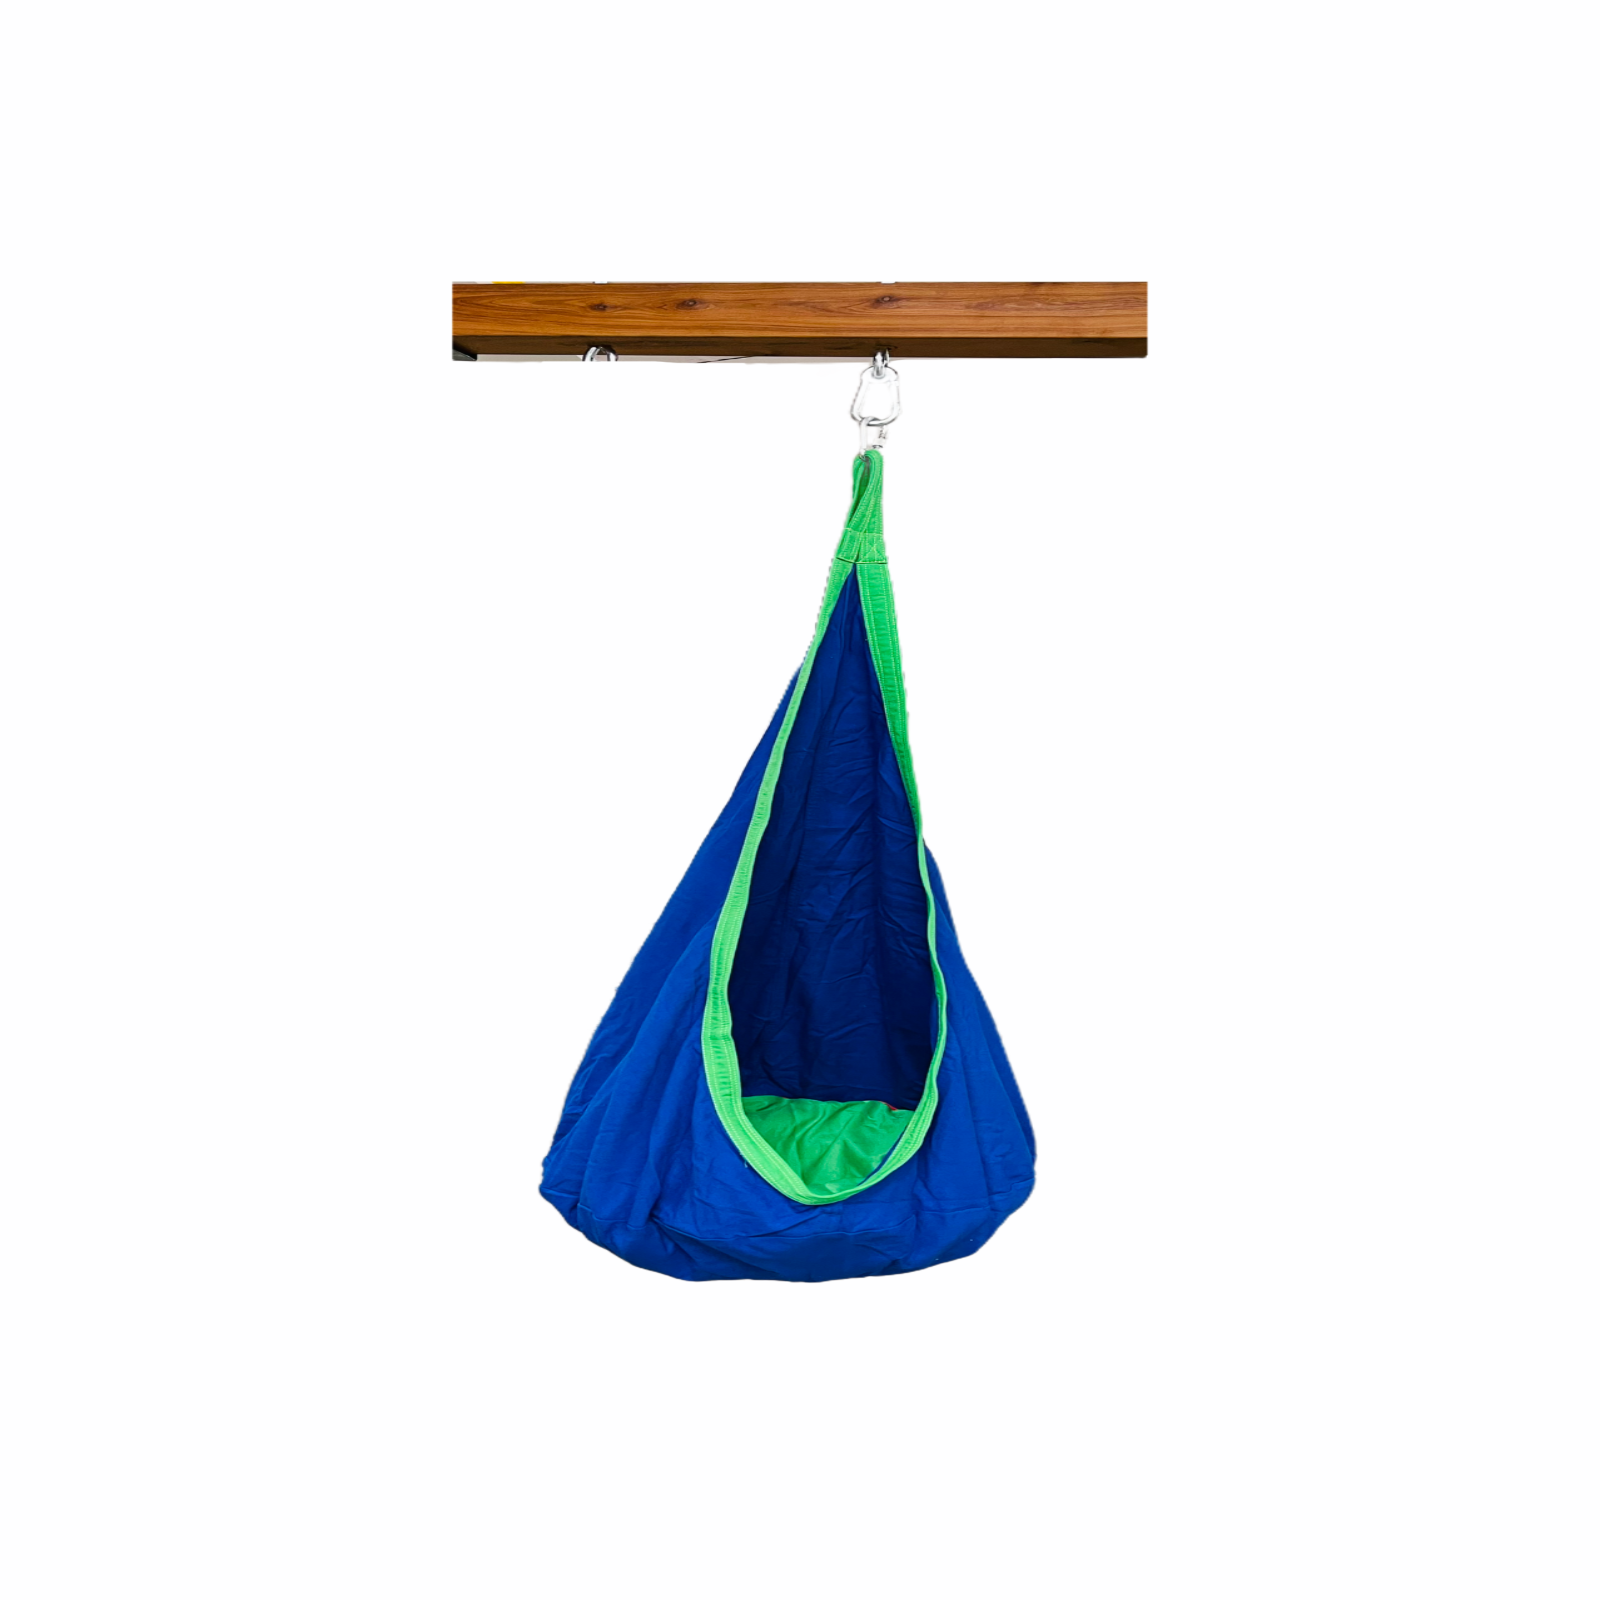 Harkla Sensory Pod Swing shown hanging